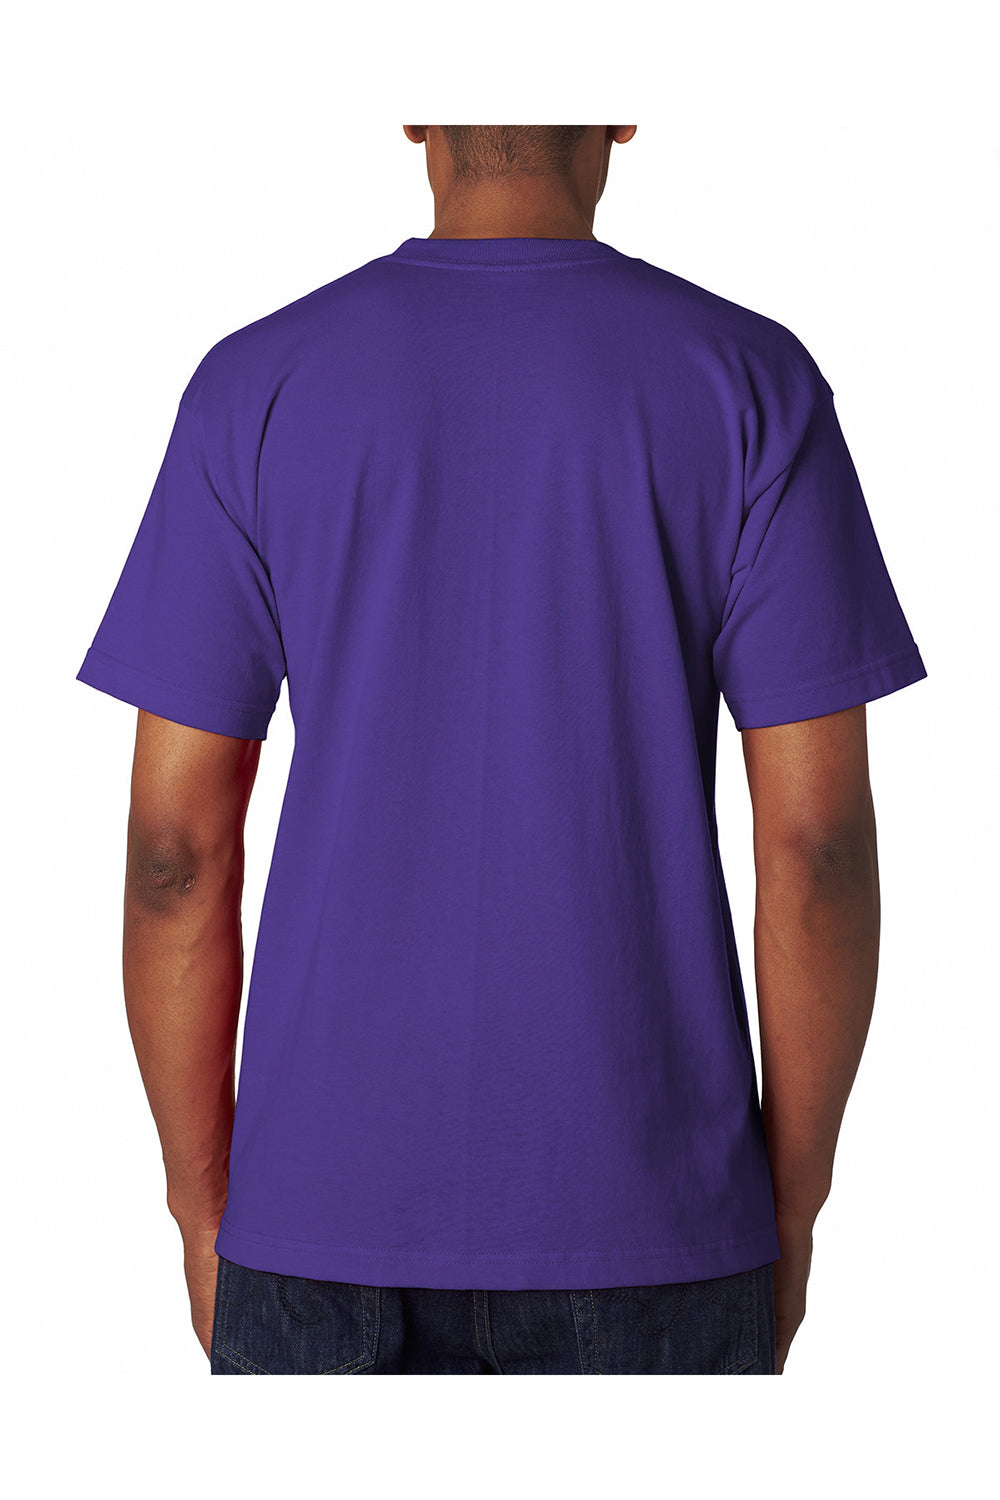 Bayside BA7100 Mens USA Made Short Sleeve Crewneck T-Shirt w/ Pocket Purple Model Back